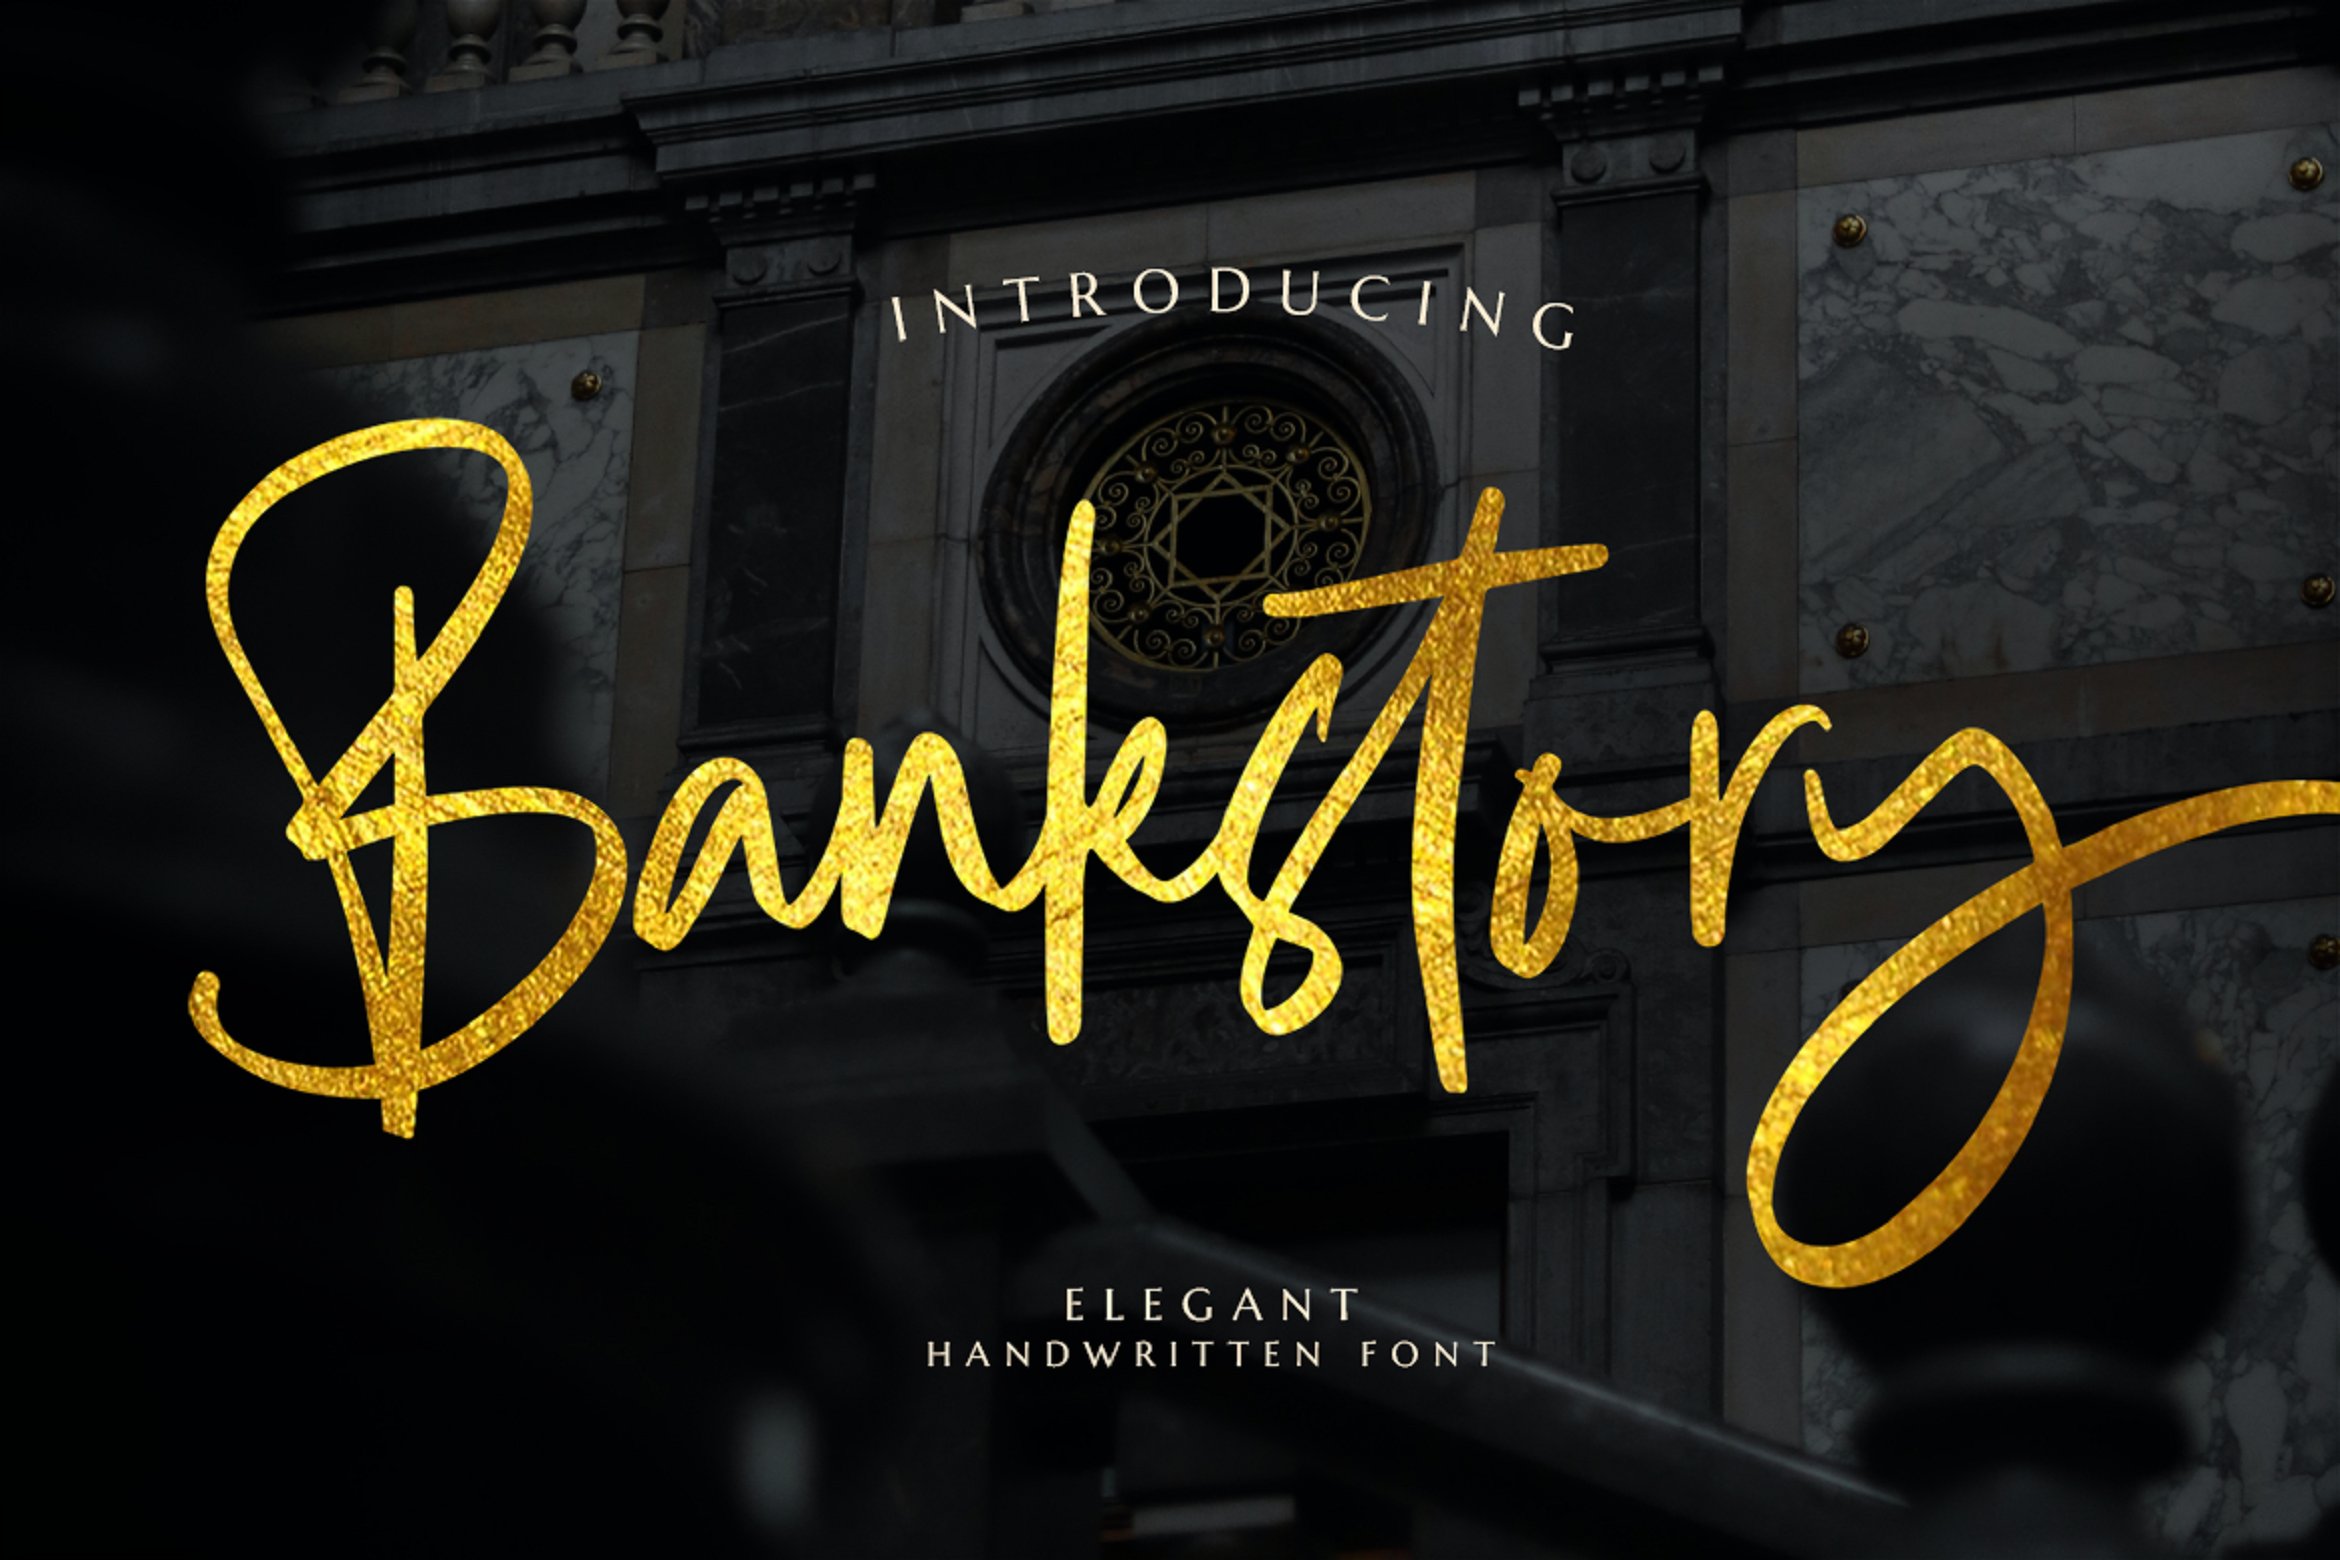 Bankstory - Handwritten Font cover image.